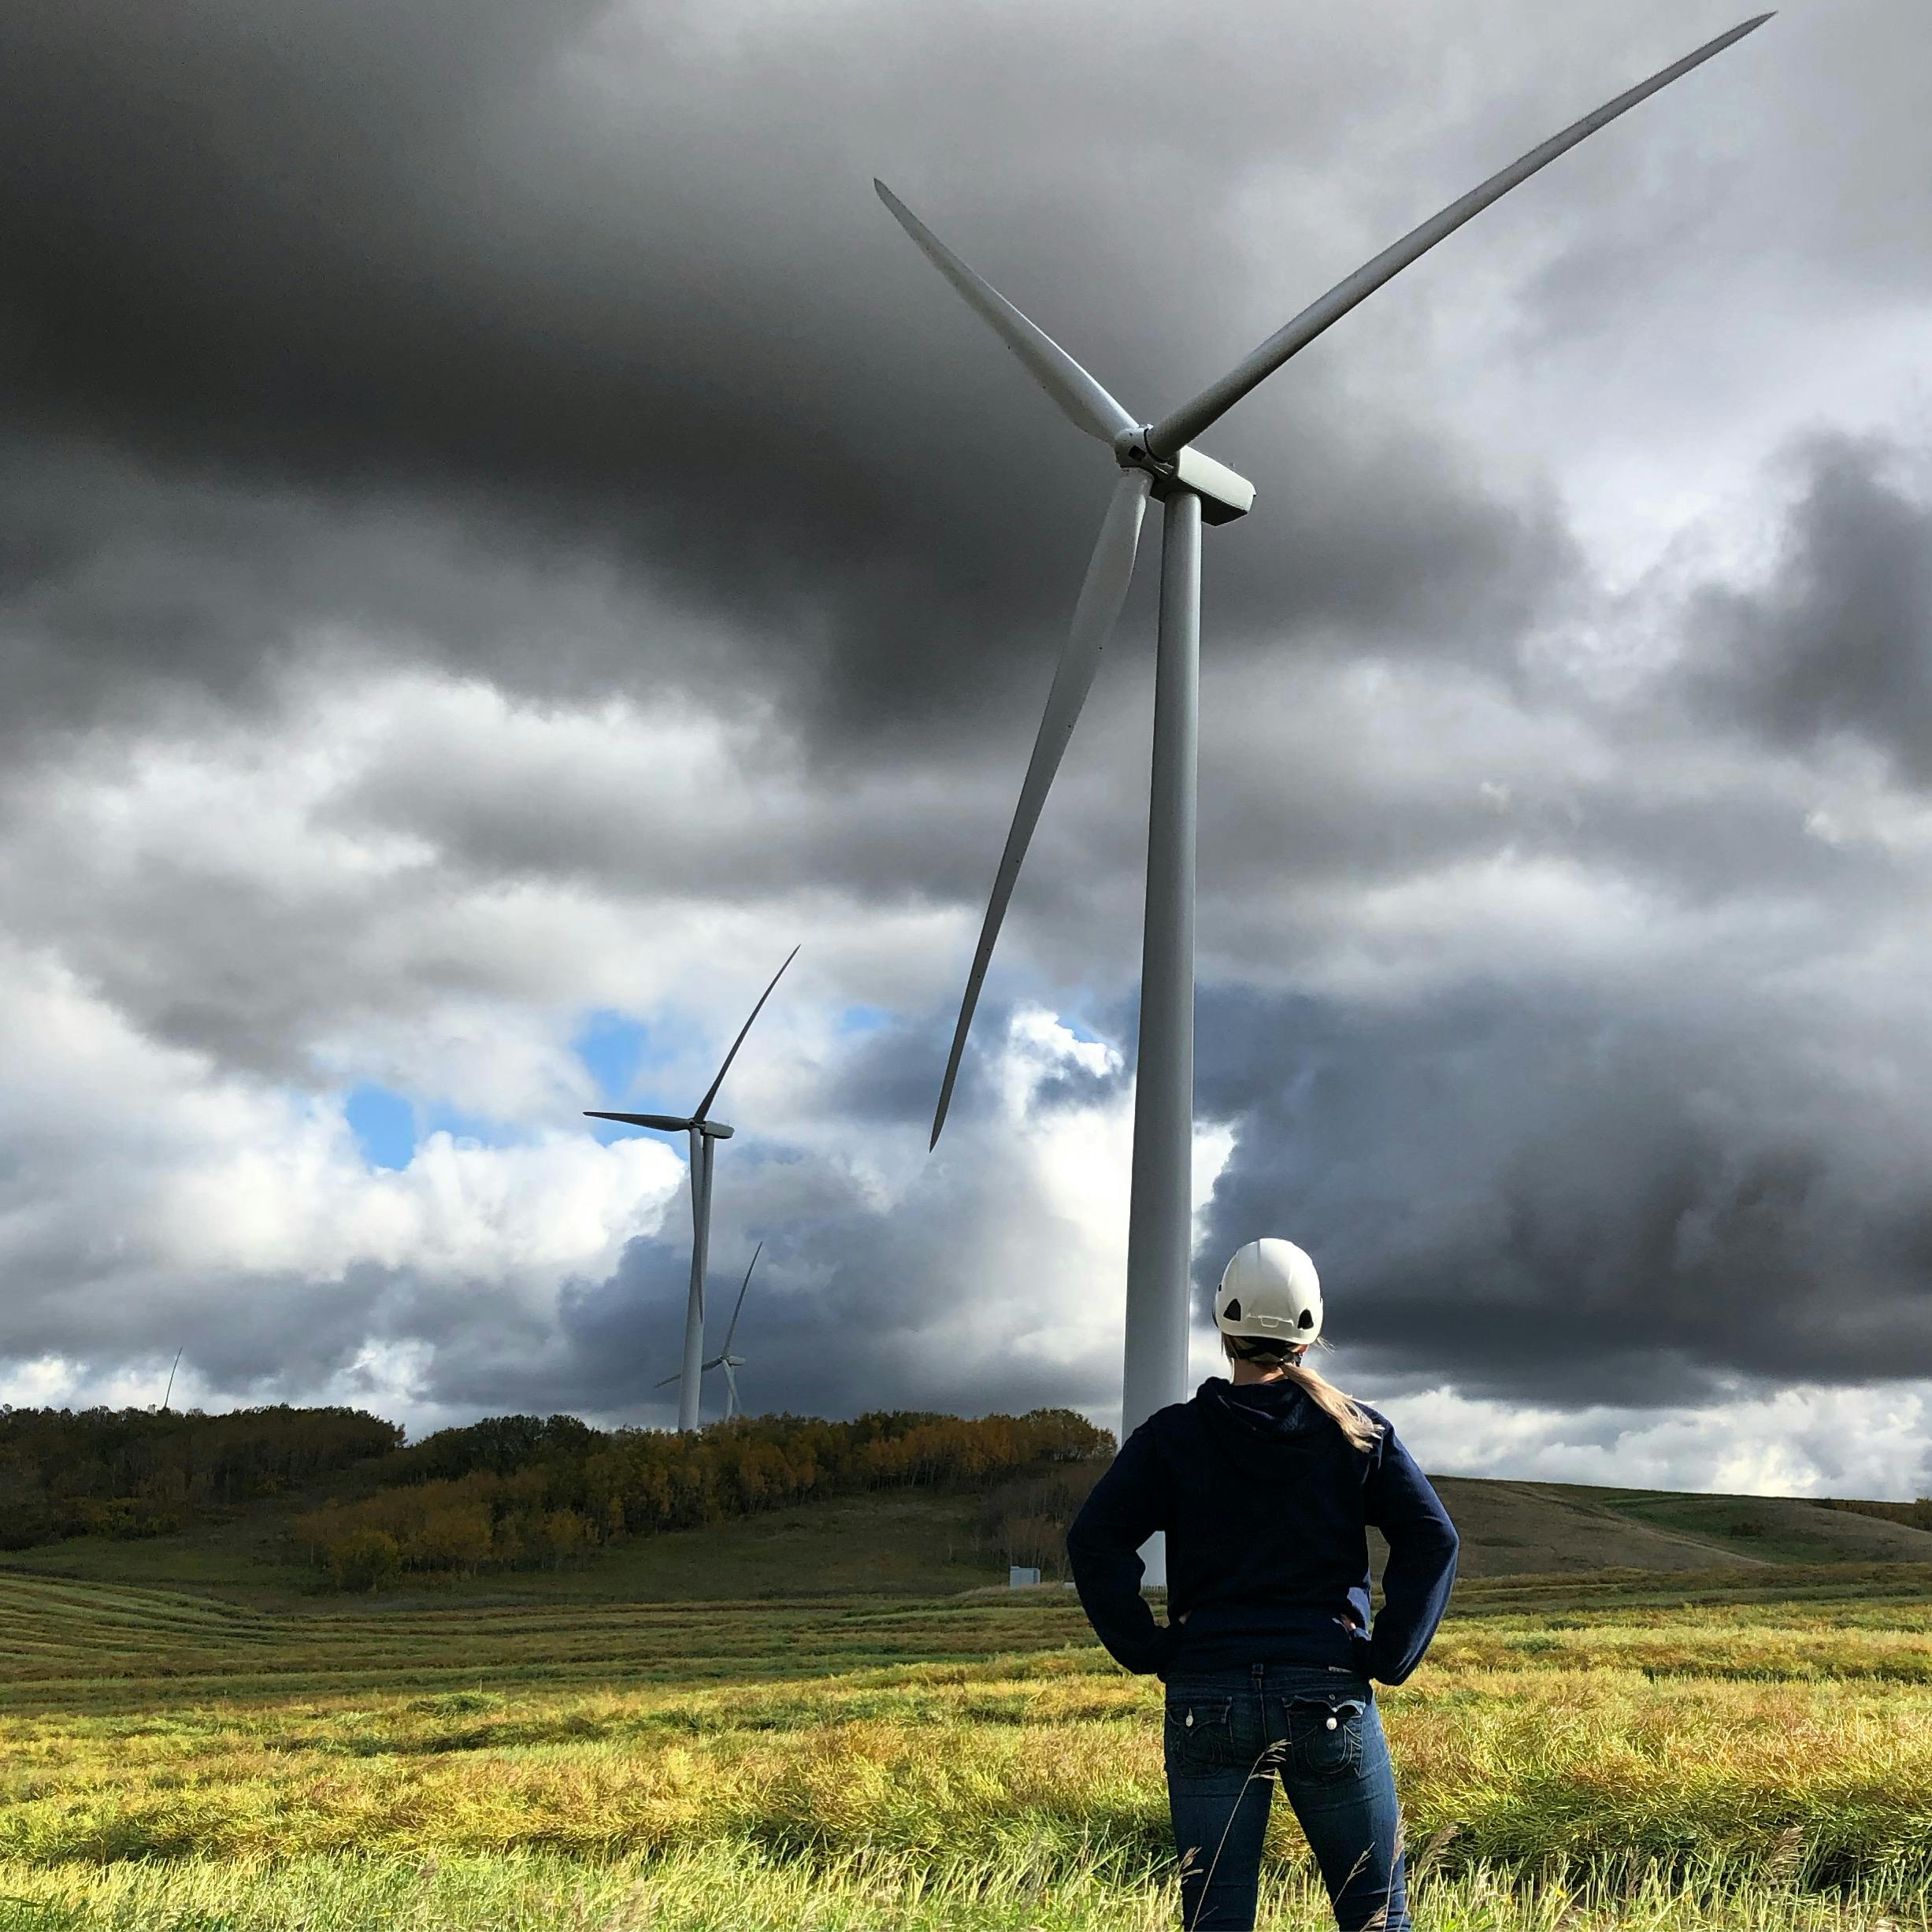 Landing a job as a wind turbine technician